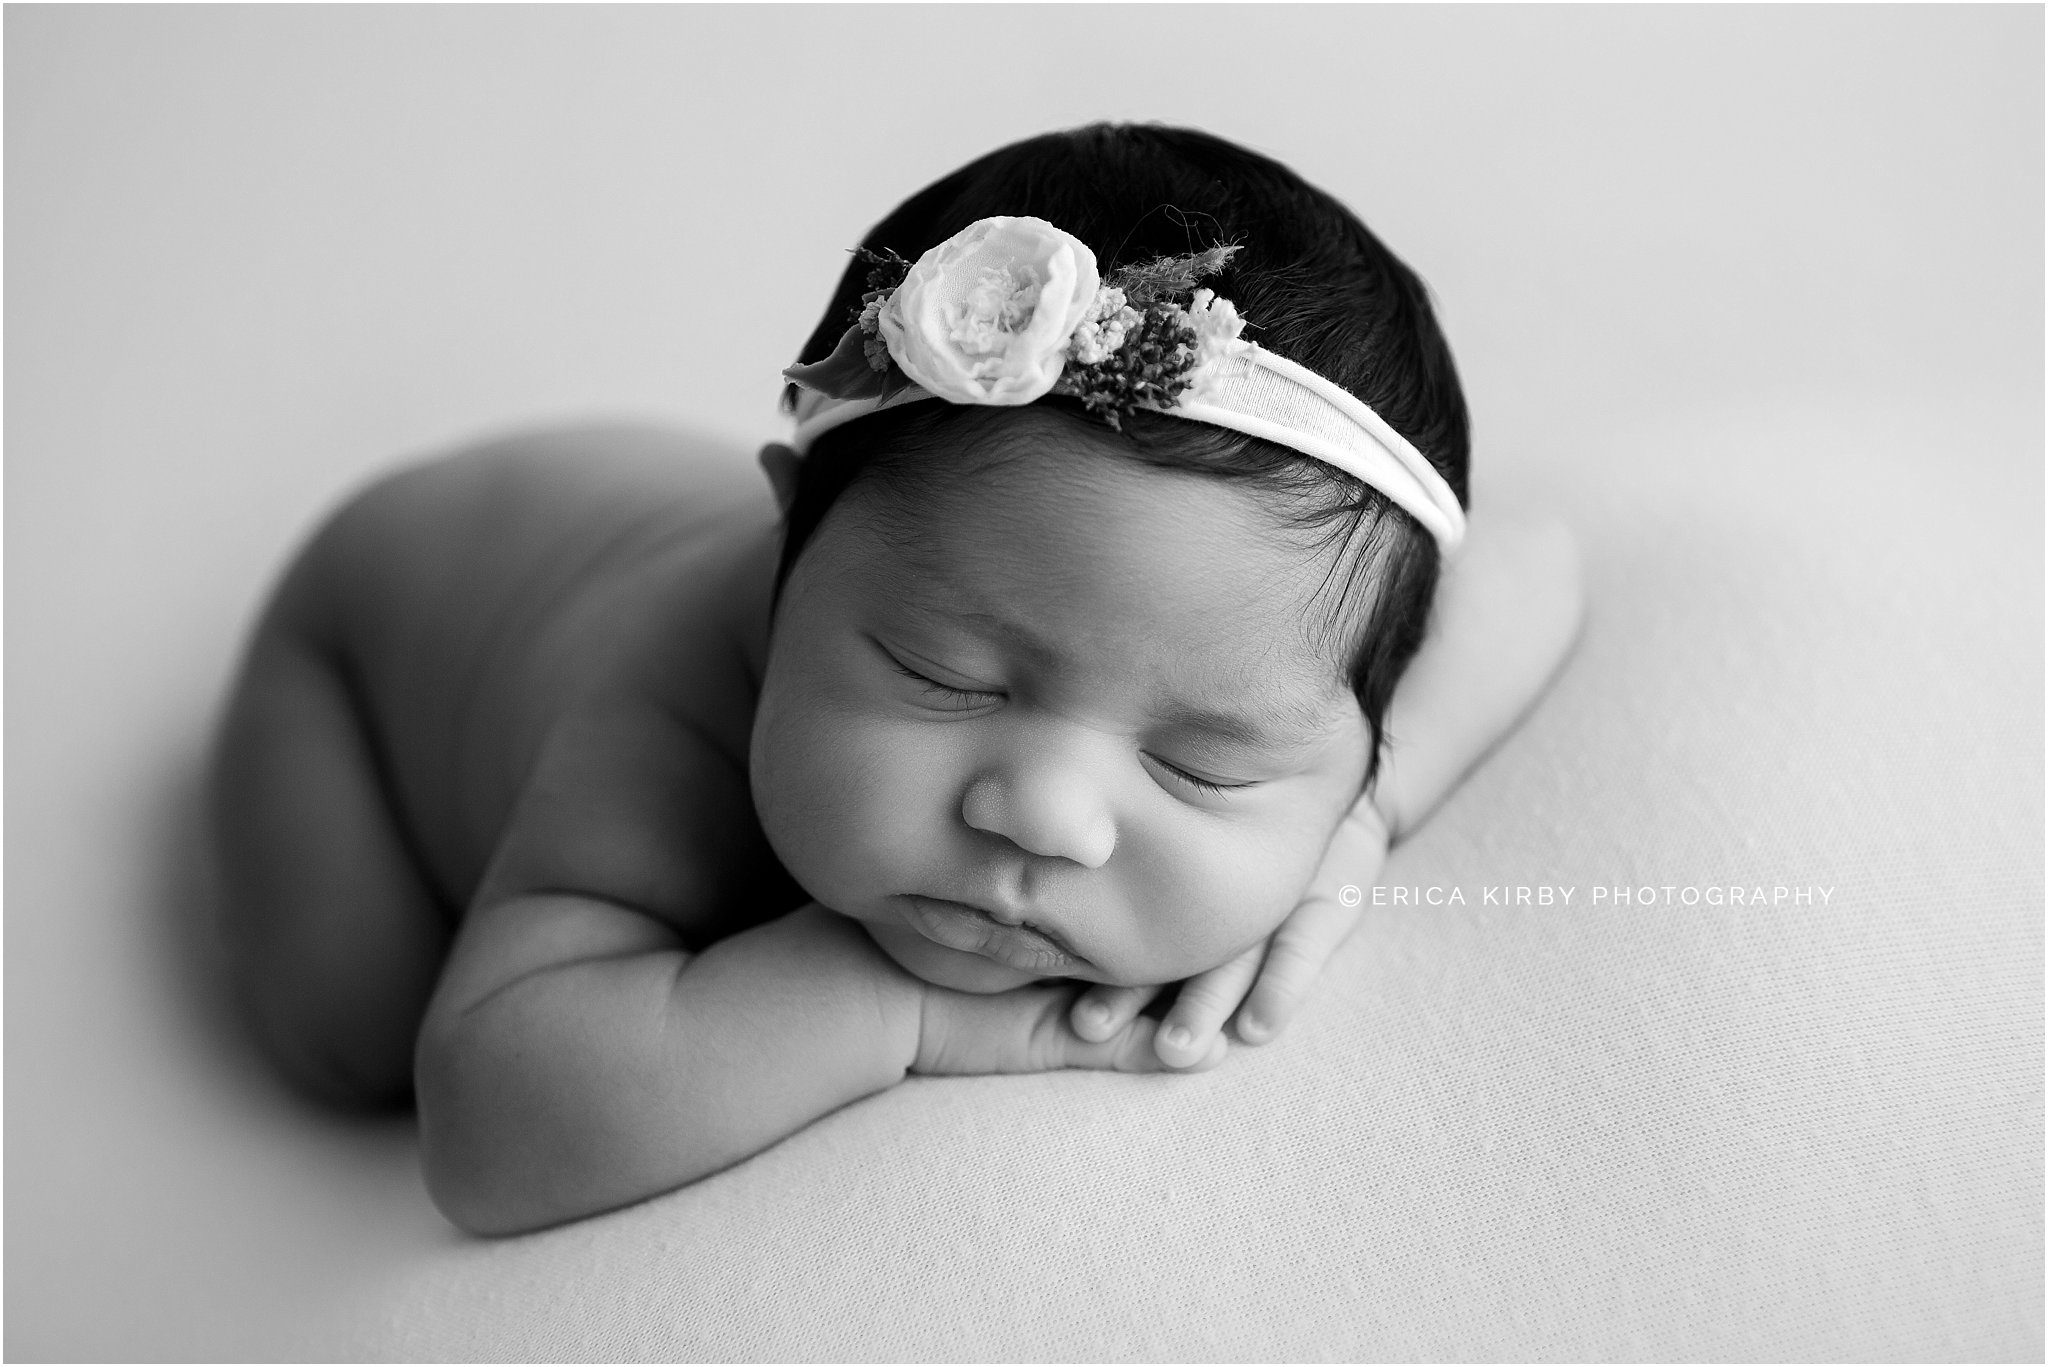 Newborn Photo Session Bentonville AR - hispanic baby girl newborn photography - erica kirby photography